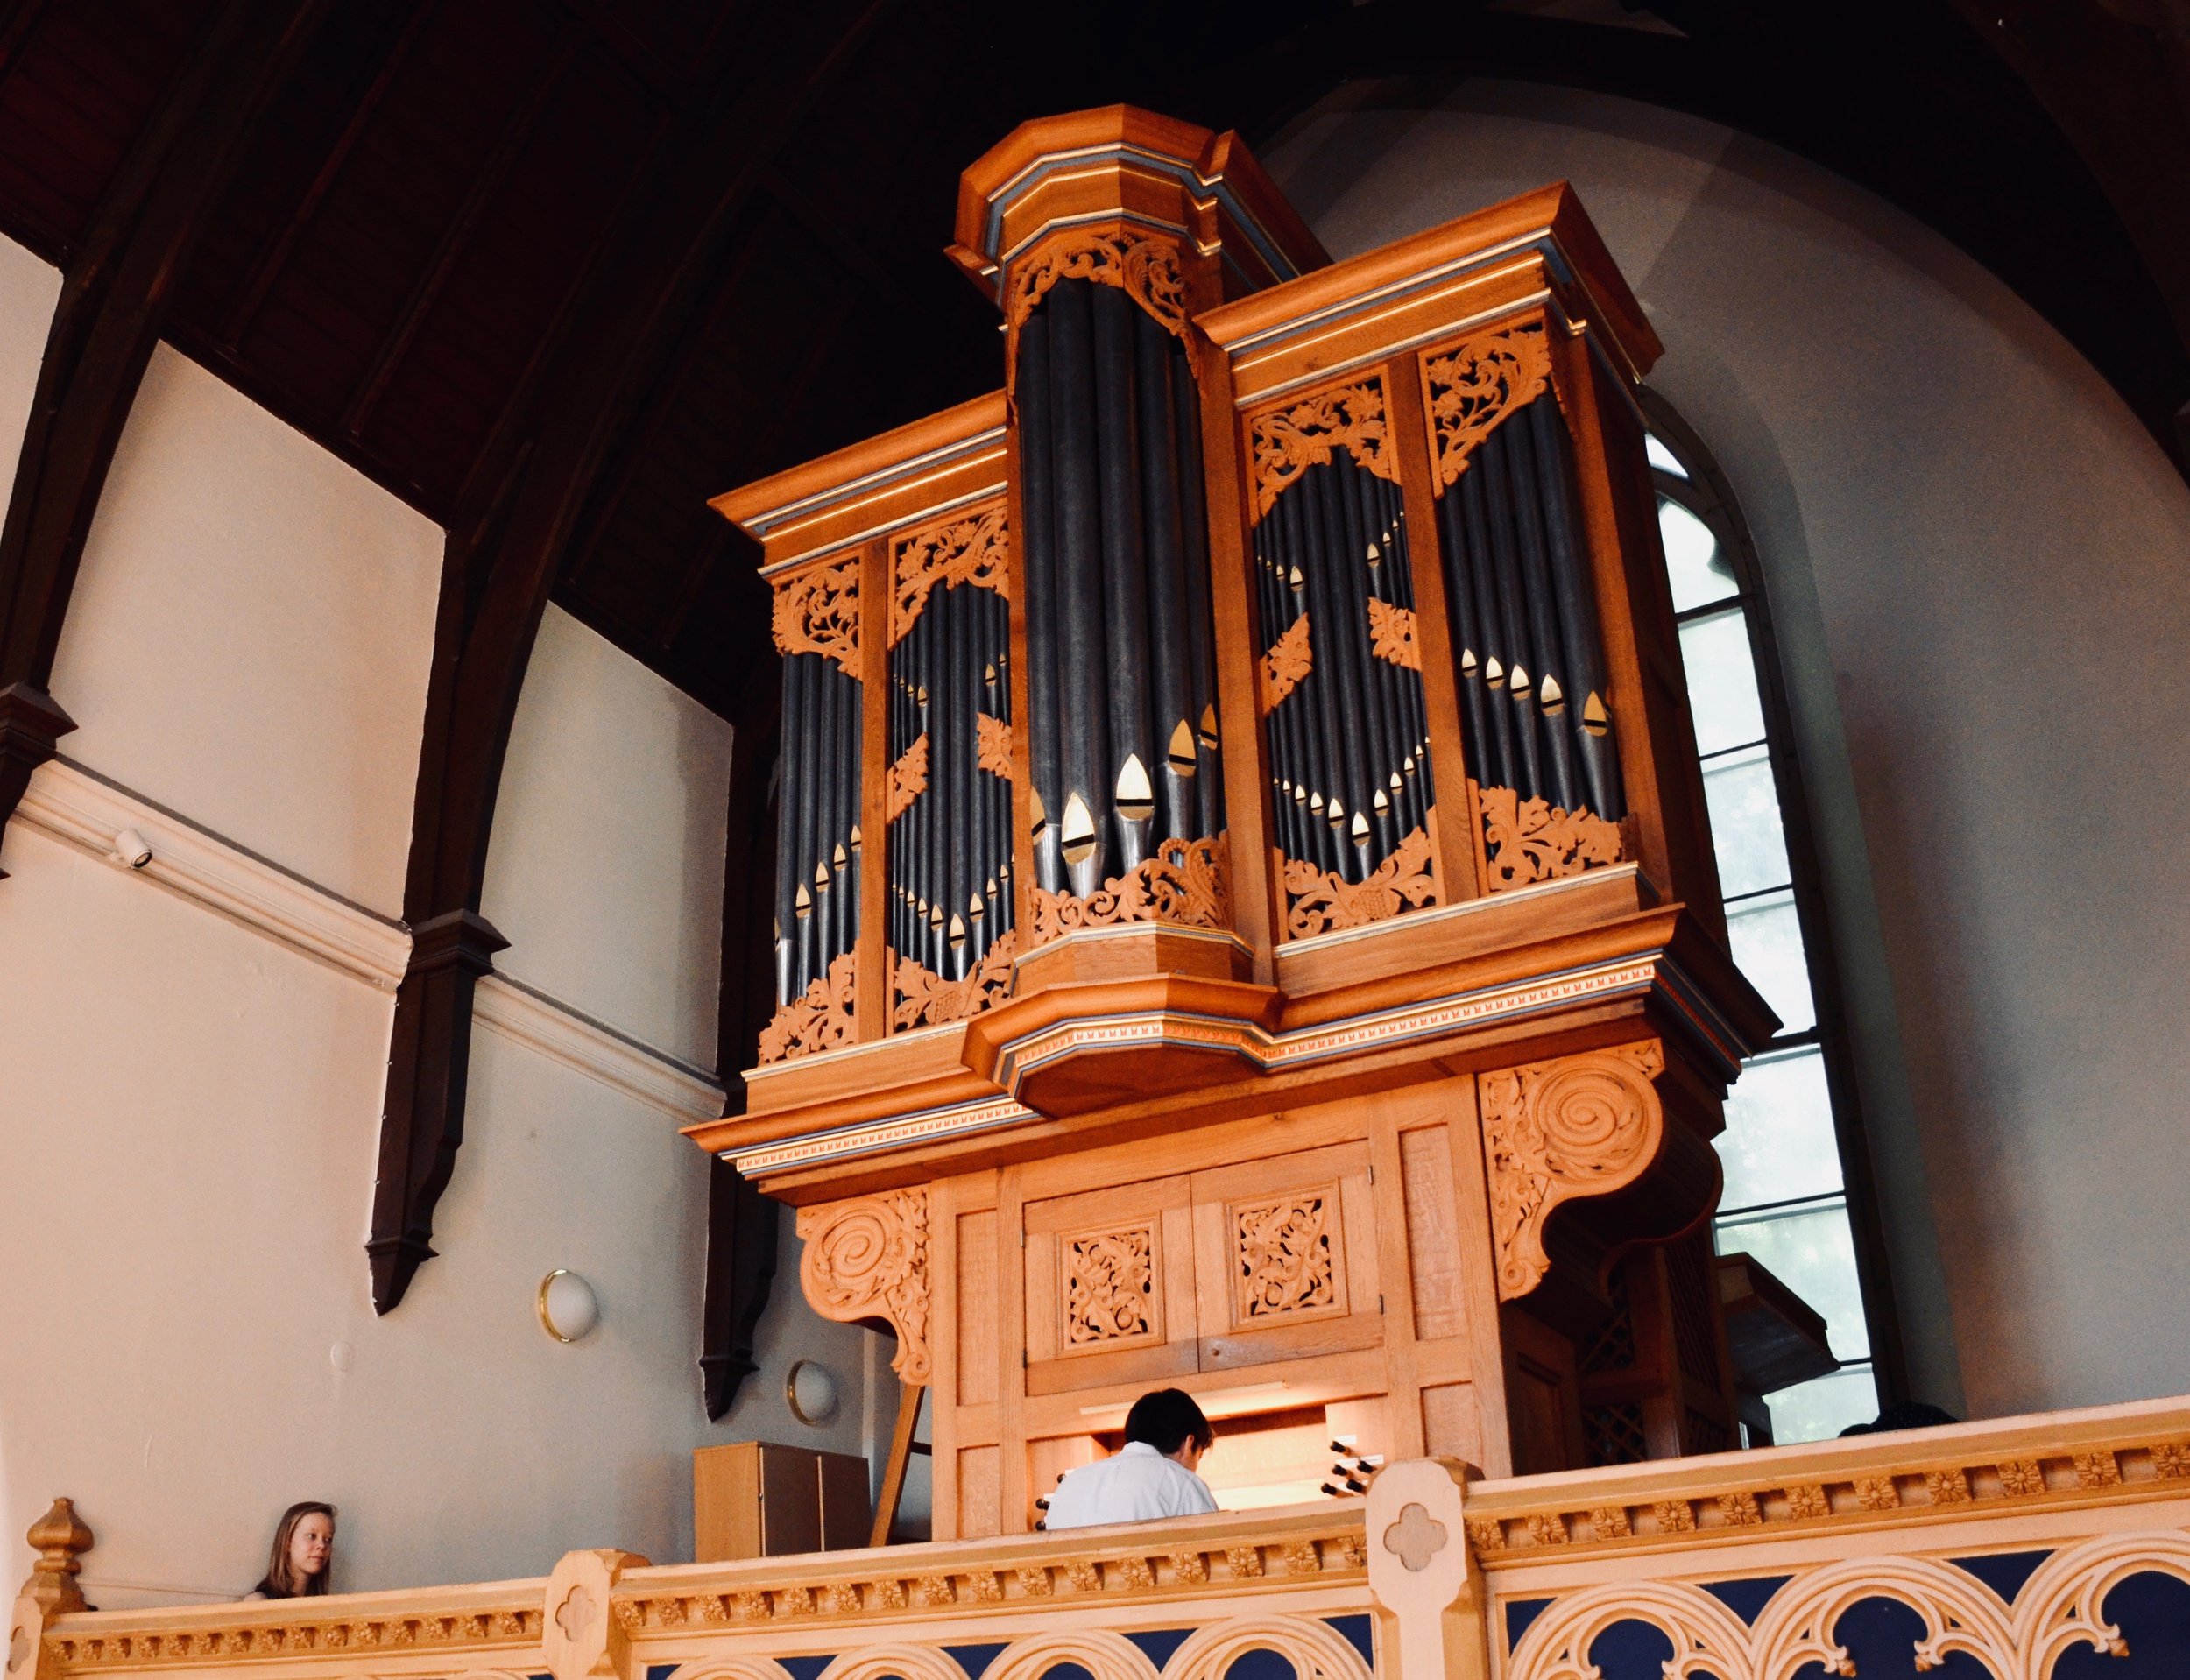  1992 Brombaugh organ, Haga Church, Göteborg, Sweden. 